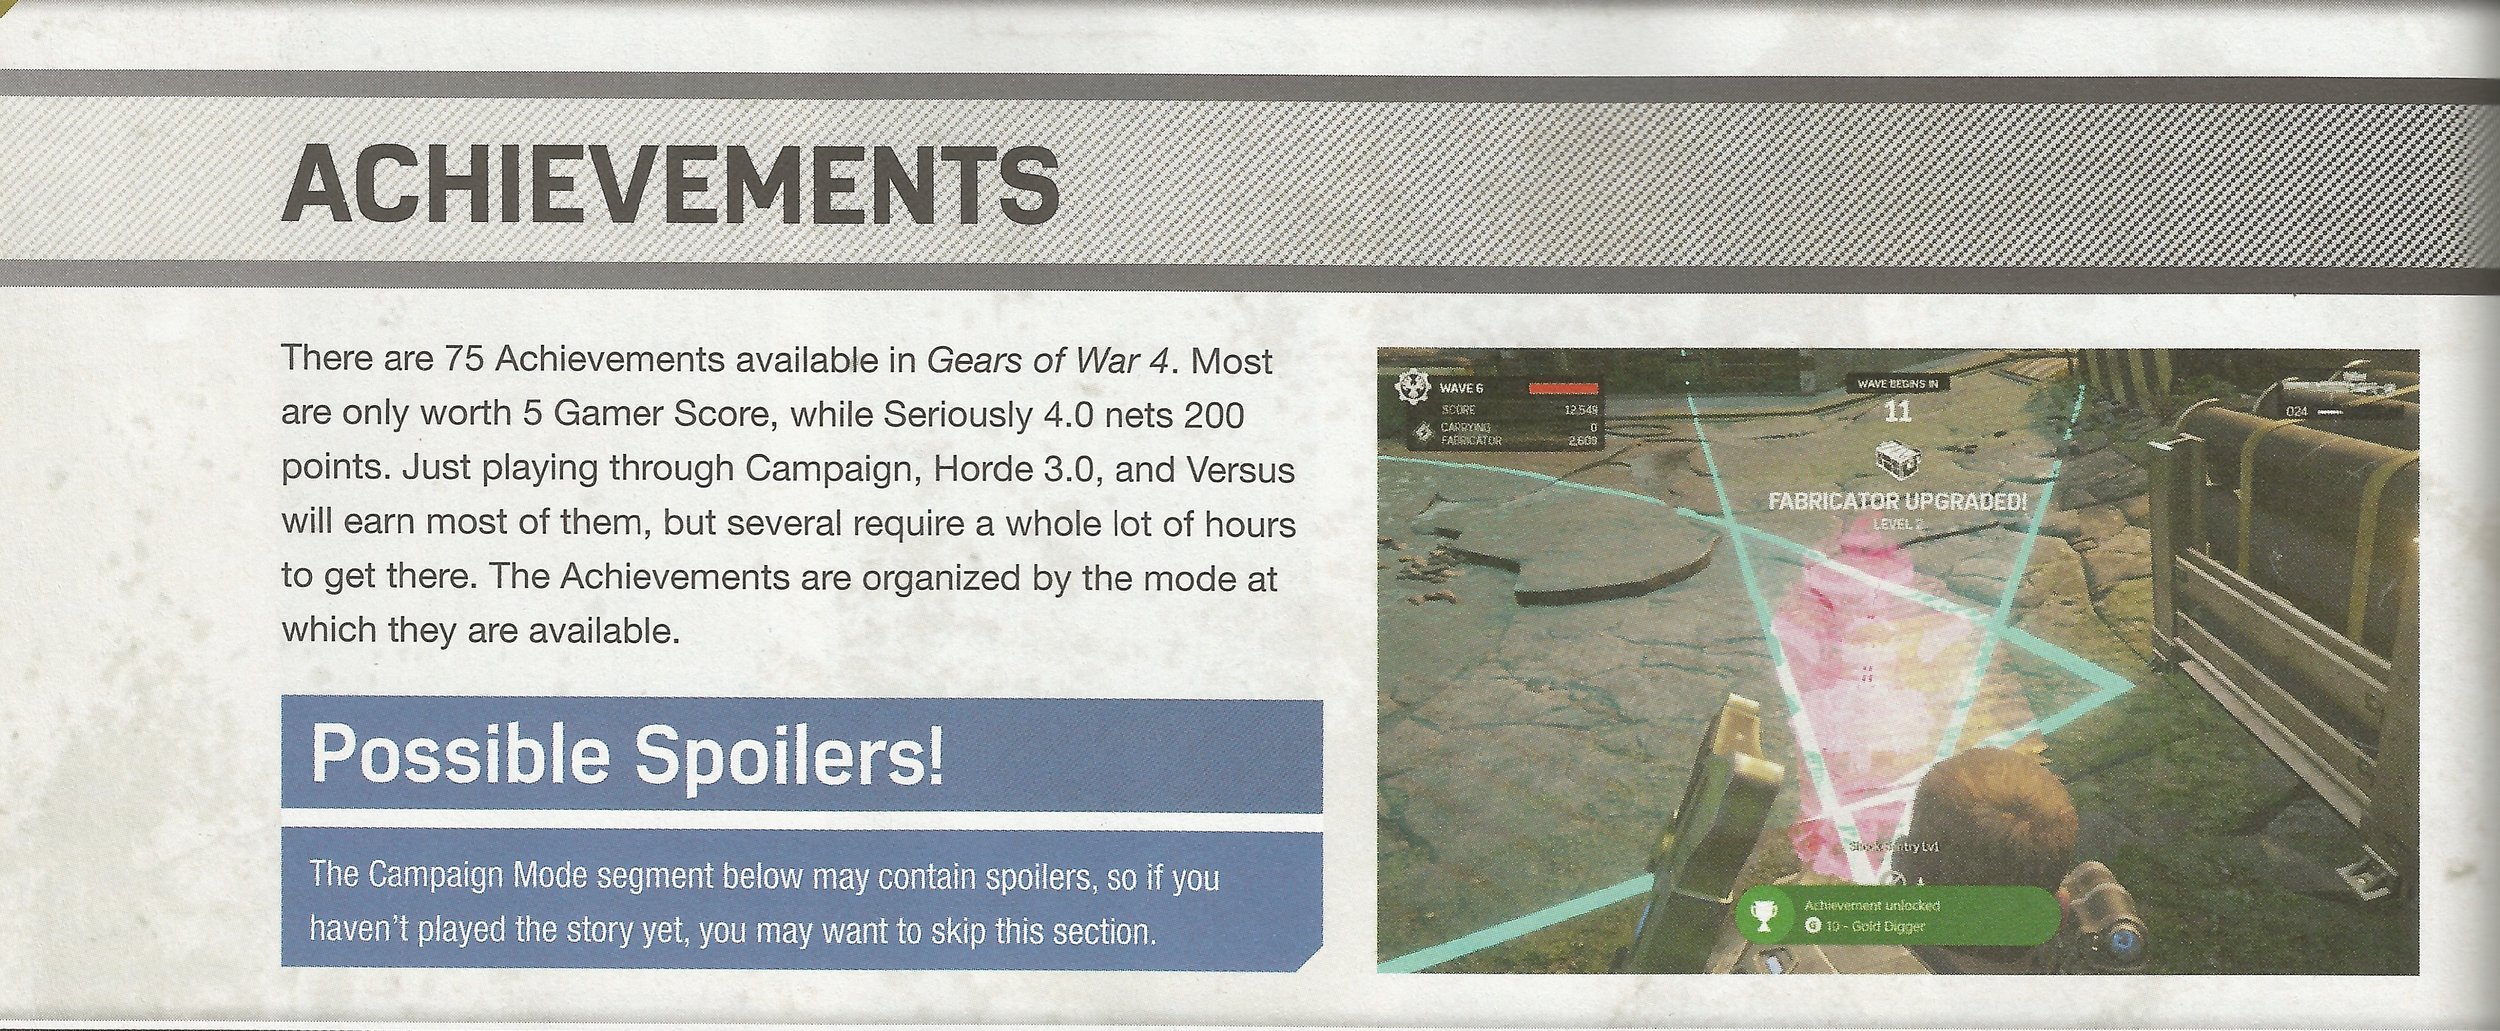 Level 10 achievement in Gears of War 4